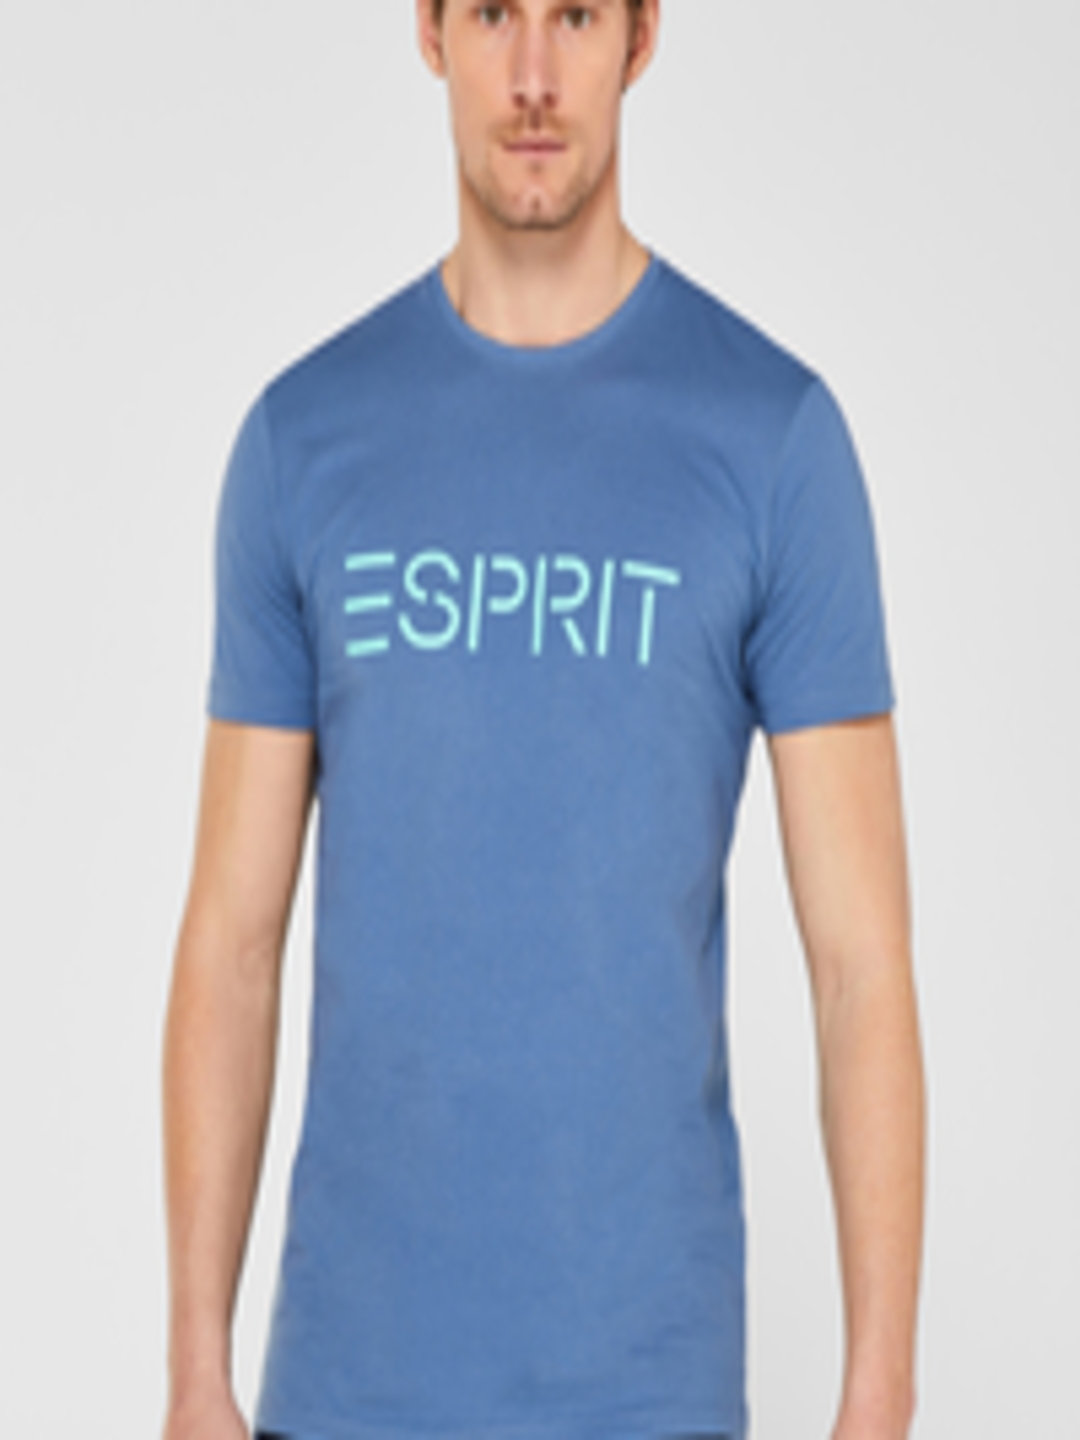 Buy ESPRIT Men Blue & Green Printed Round Neck T Shirt - Tshirts for ...